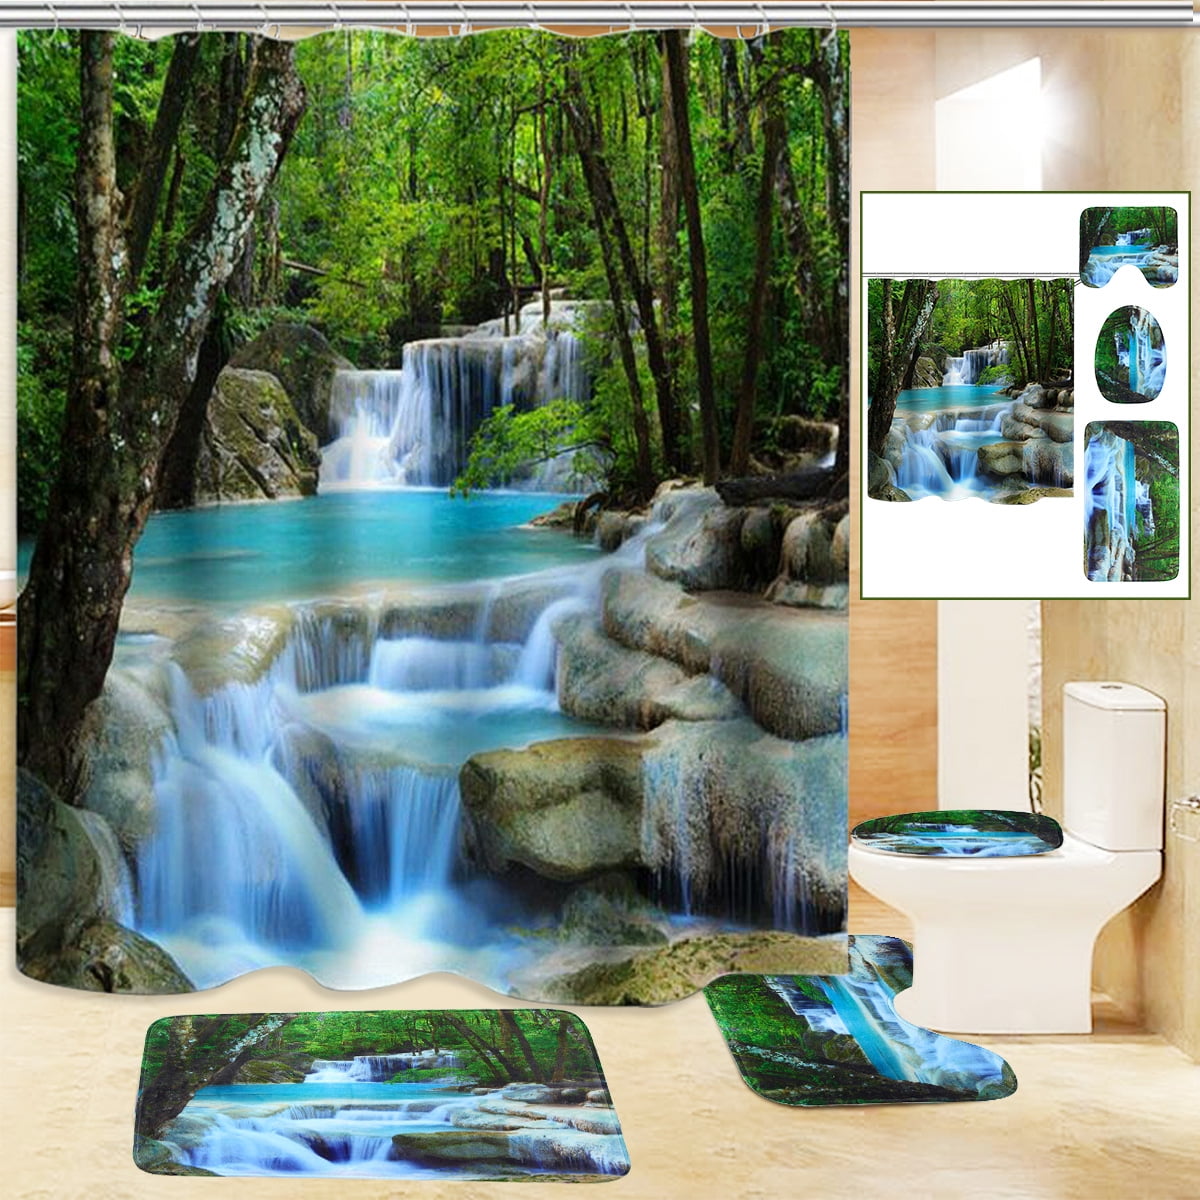 72" Beautiful Waterfall Scenery Shower Curtain Liner Bathroom Waterproof Fabric 